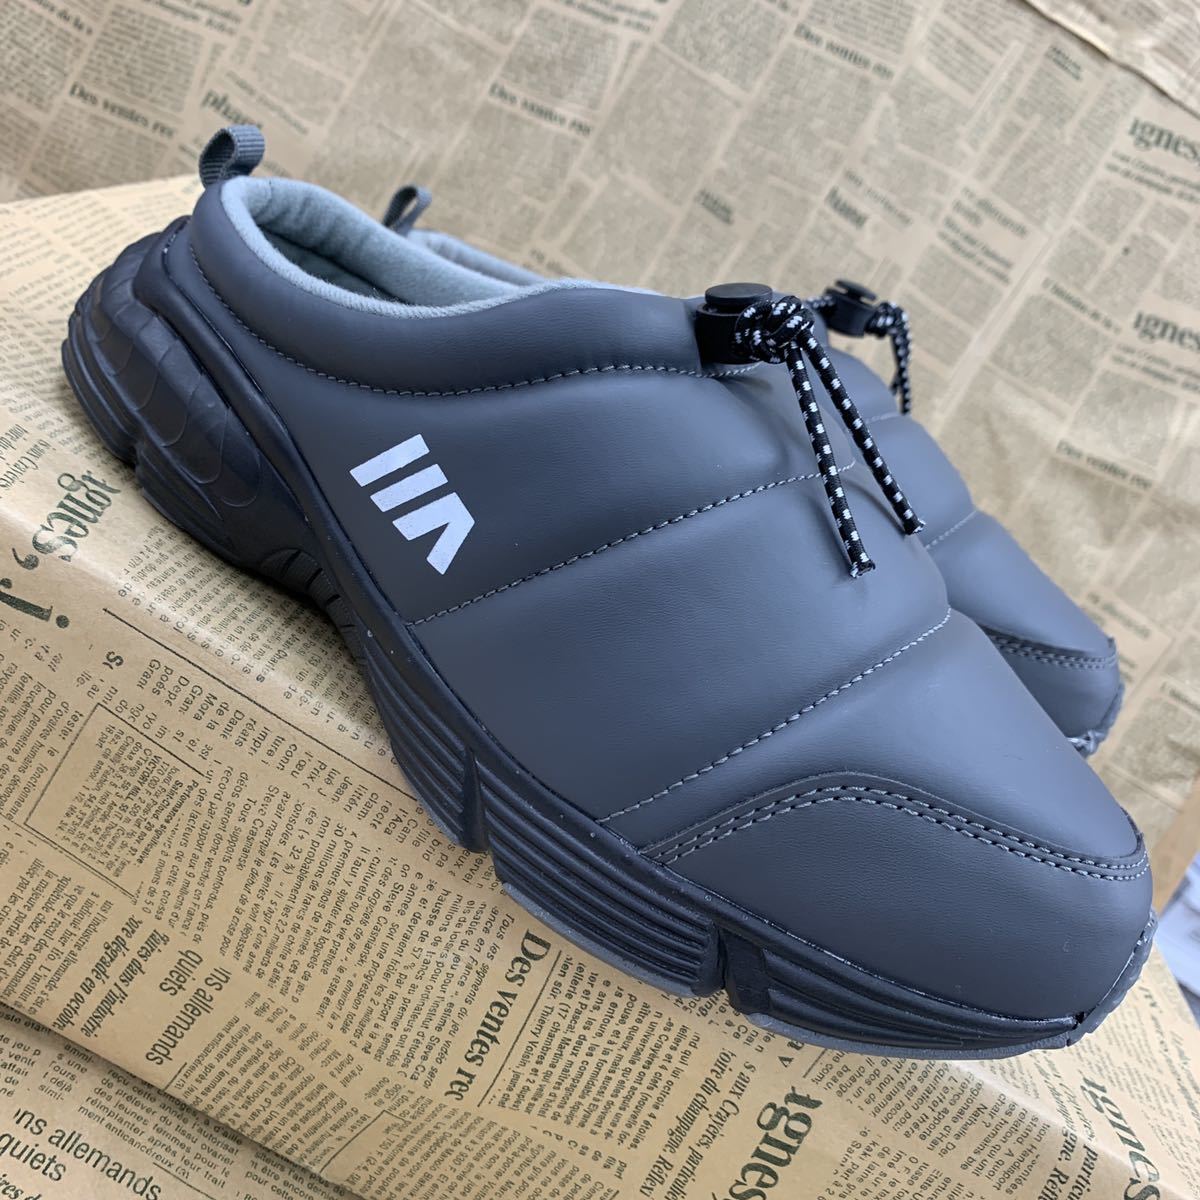  new goods men's S size 24.0-24.5cm reverse side nappy sabot sandals cotton inside fake leather sandals sabot sneakers reverse side nappy shoes gray osw2966